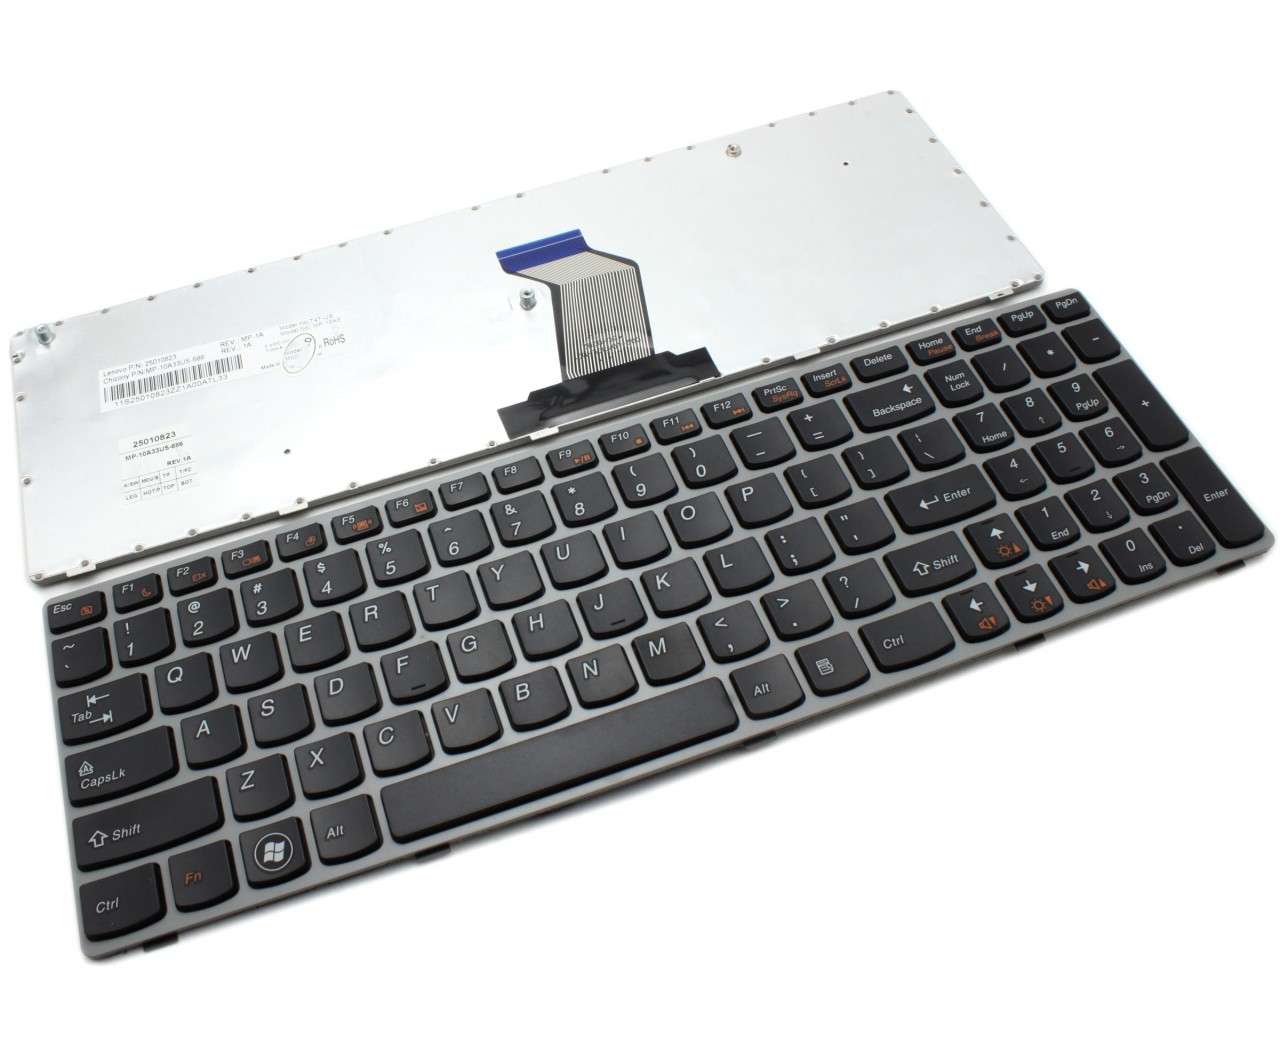 Tastatura Lenovo IdeaPad G575L Neagra cu Rama Gri Originala